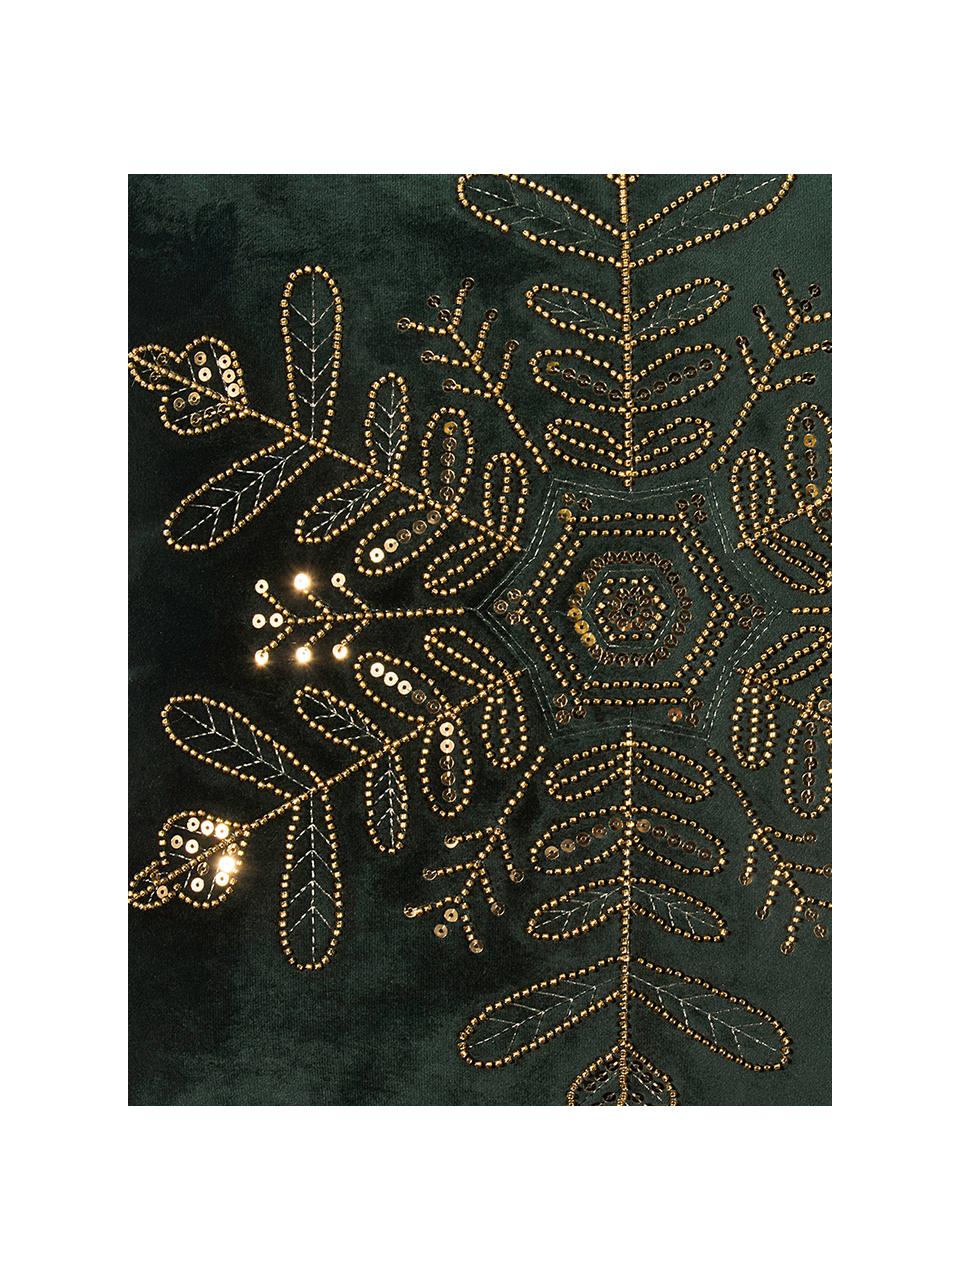 Samt-Kissenhülle Sparkle mit besticktem Perlen-Motiv, Polyestersamt, Dunkelgrün, Goldfarben, B 45 x L 45 cm